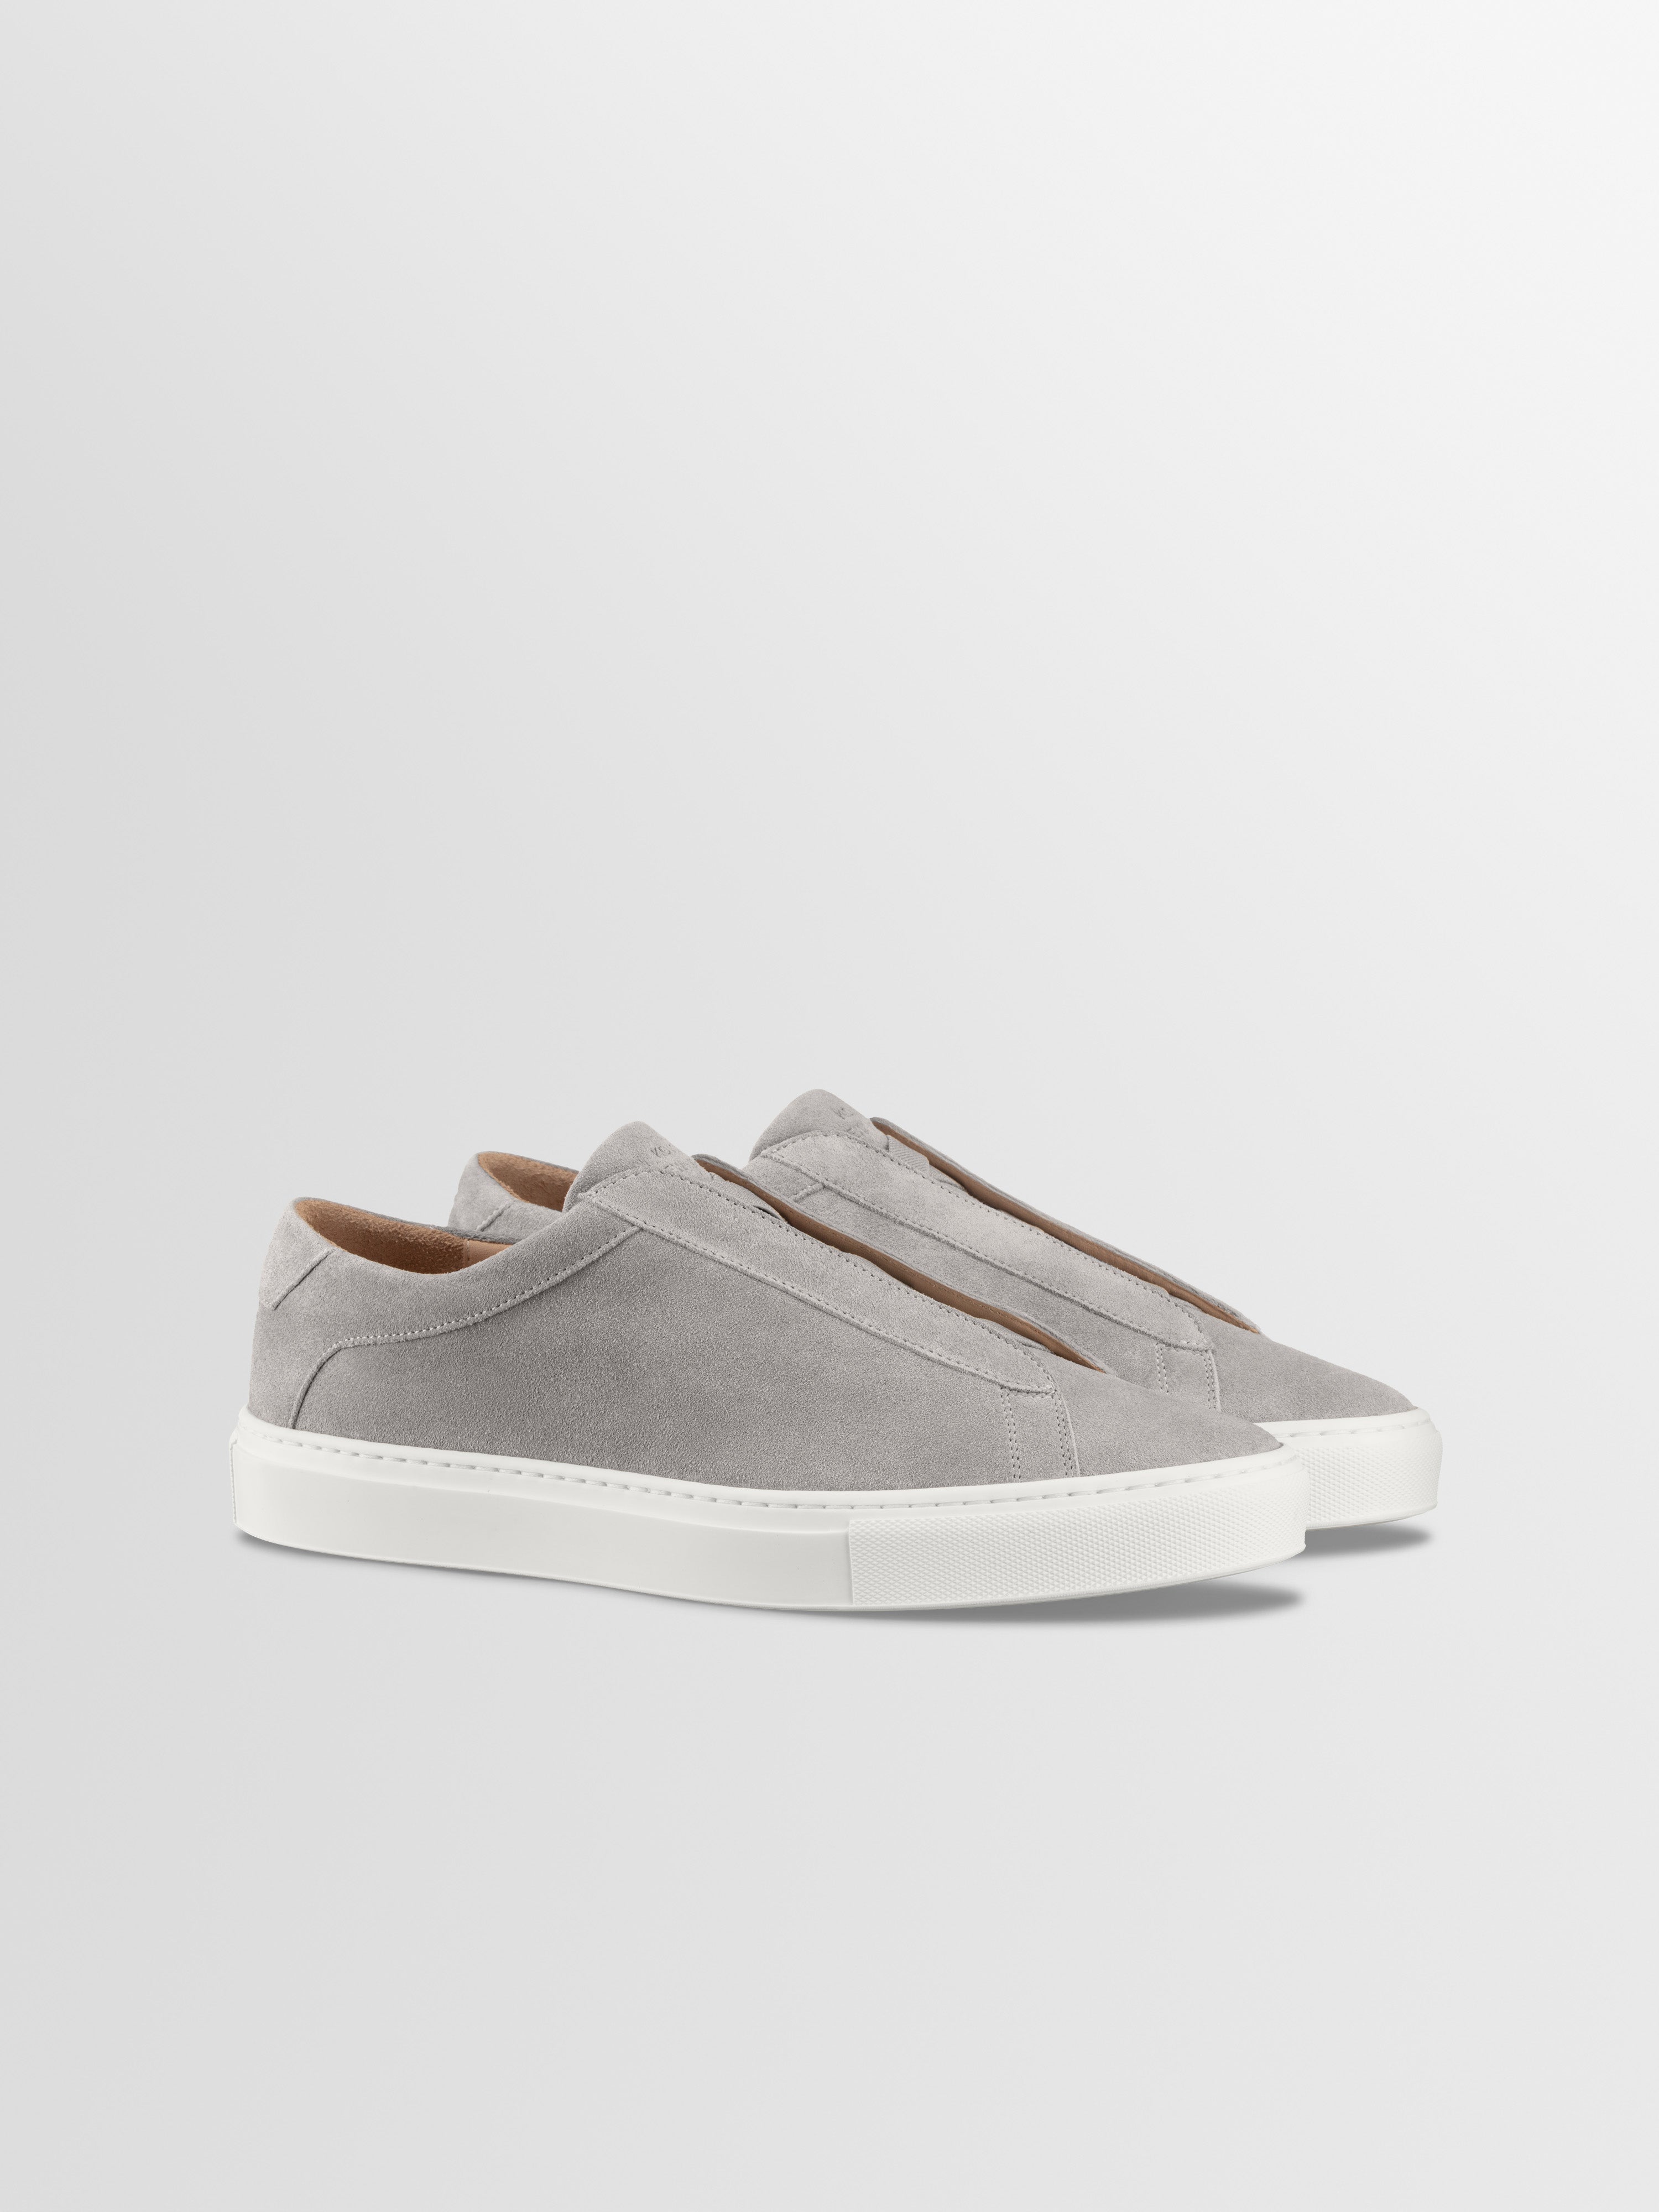 Men's Grey Suede Low-top Sneaker | Capri X in Mineral | Koio – KOIO